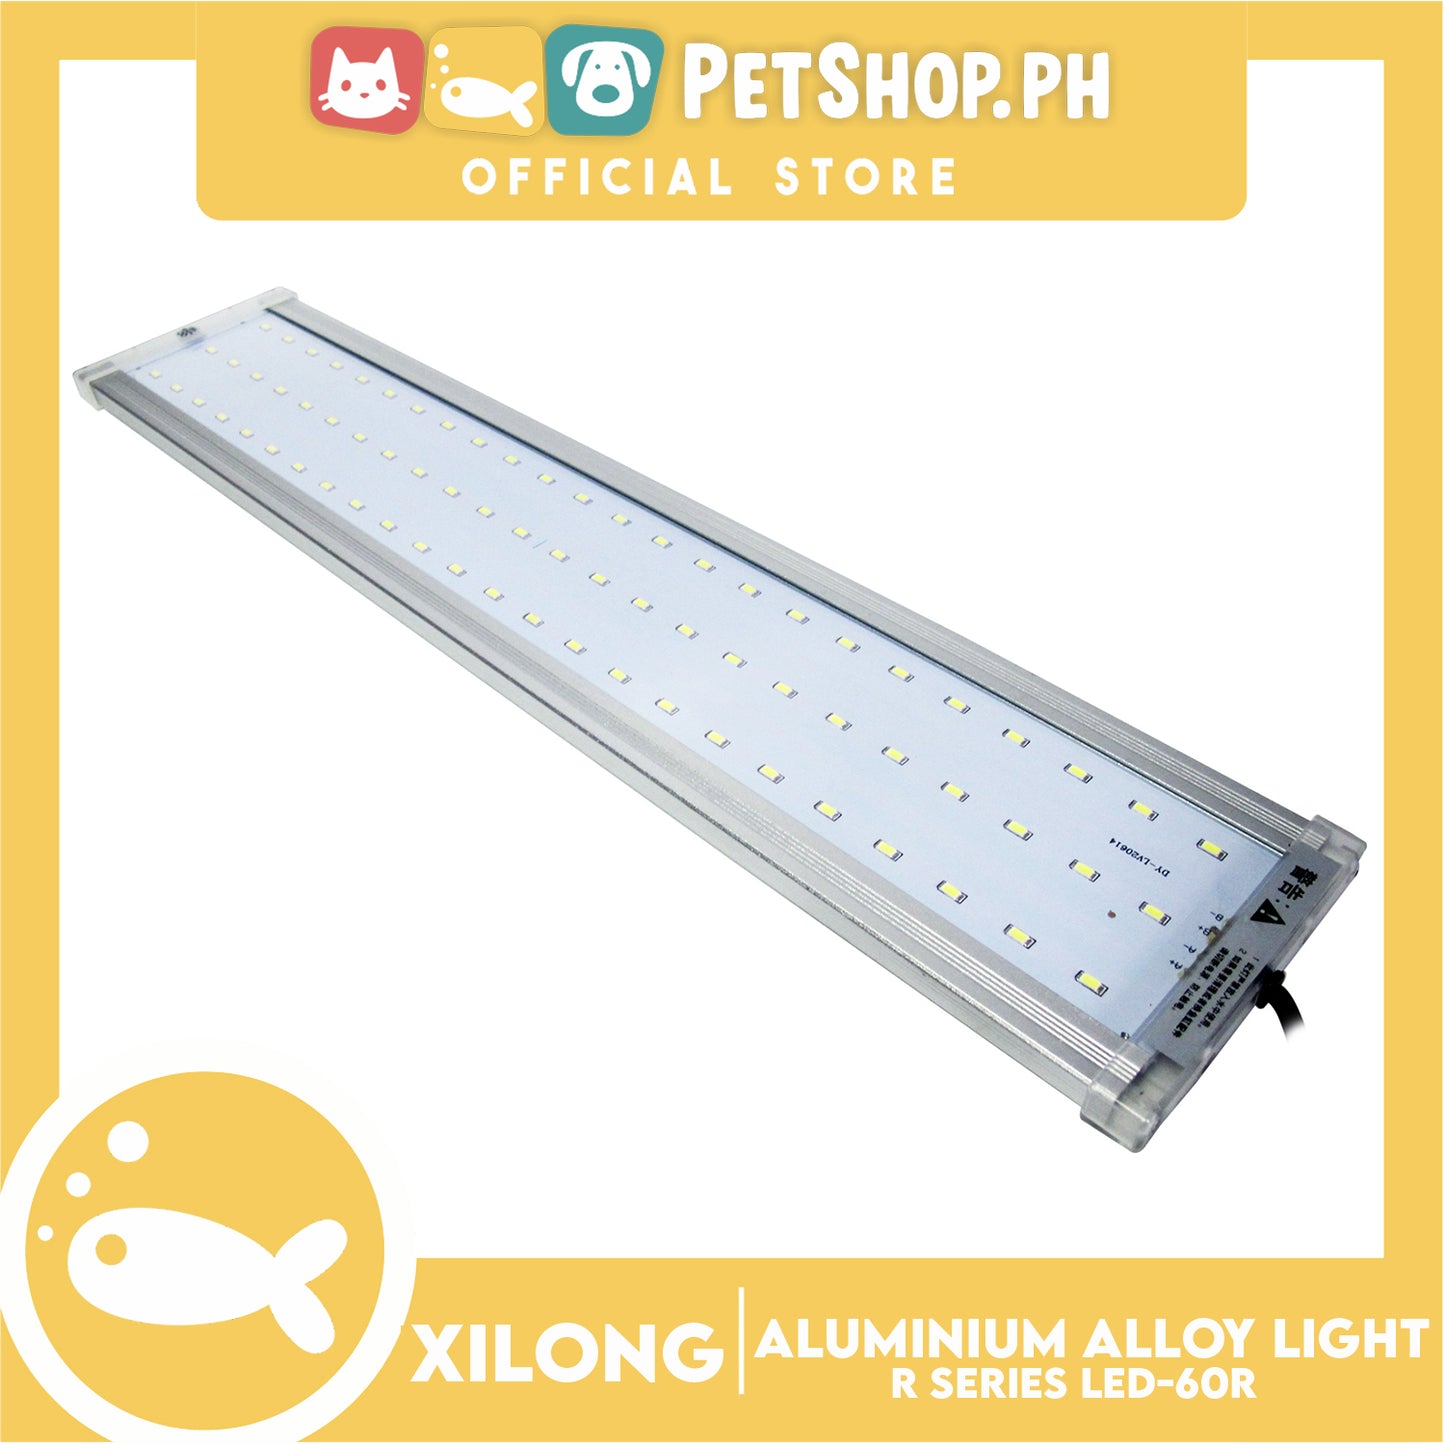 LED-60R Alloy Alum Bracket Light 22w